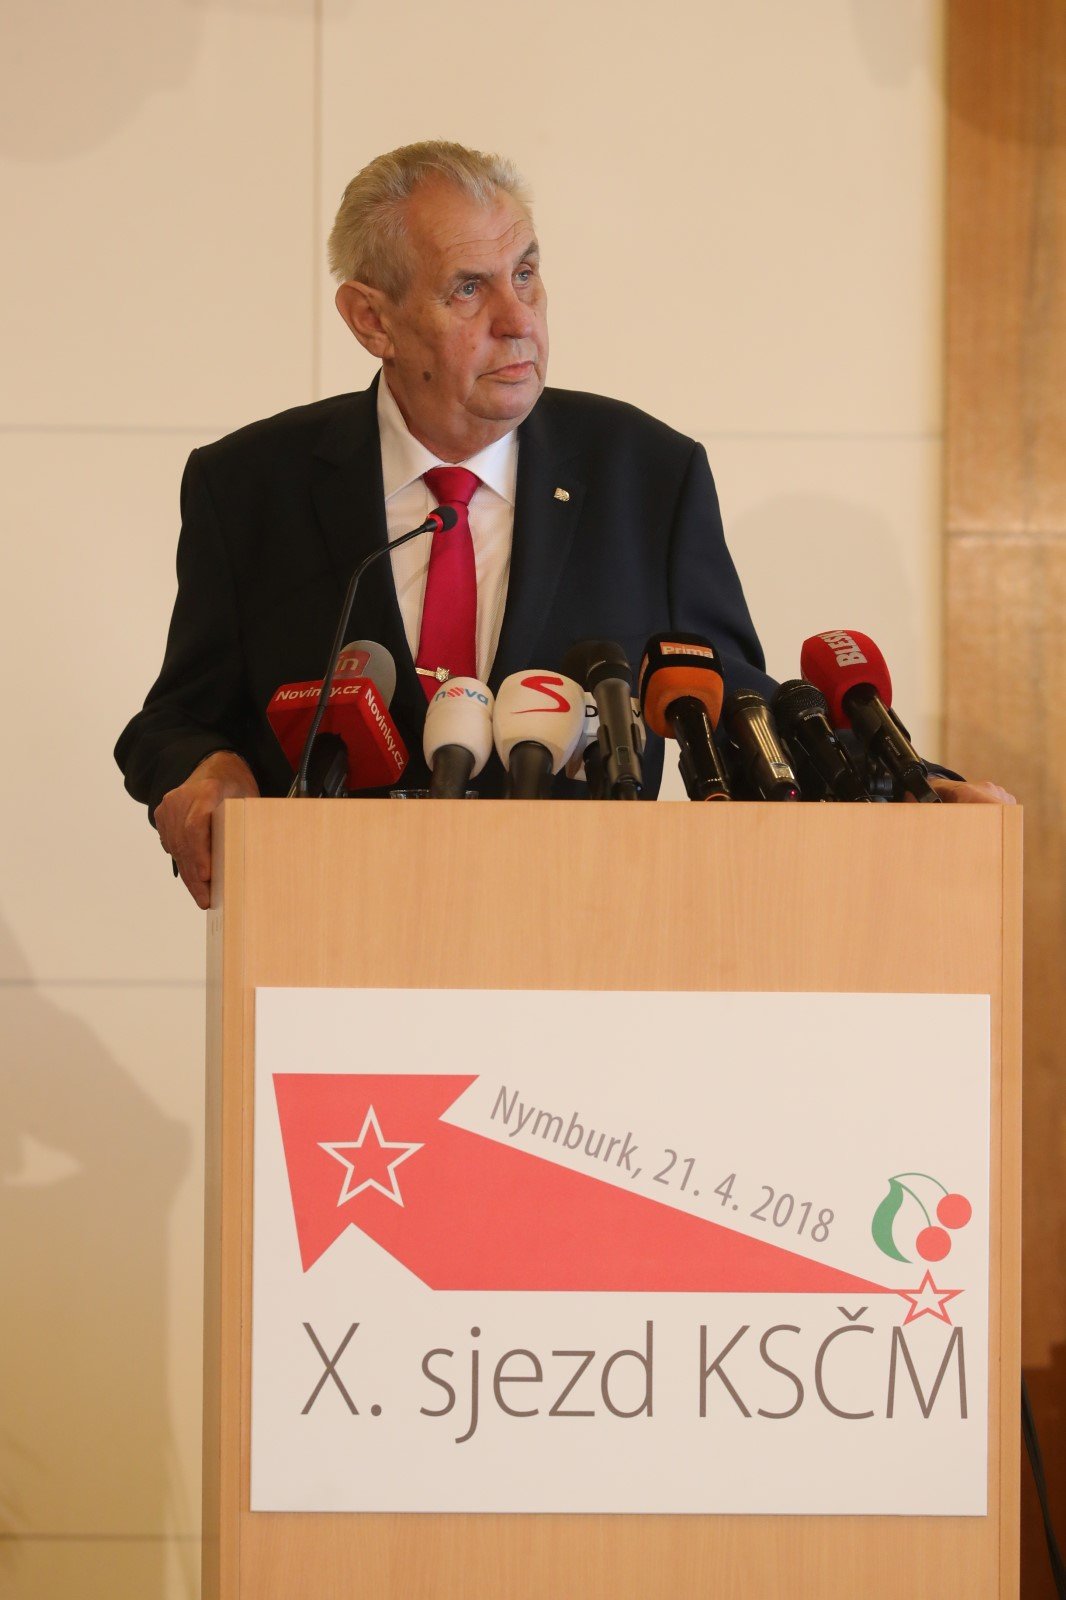 Miloš Zeman na sjezdu KSČM v Nymburku (21.4.2018)